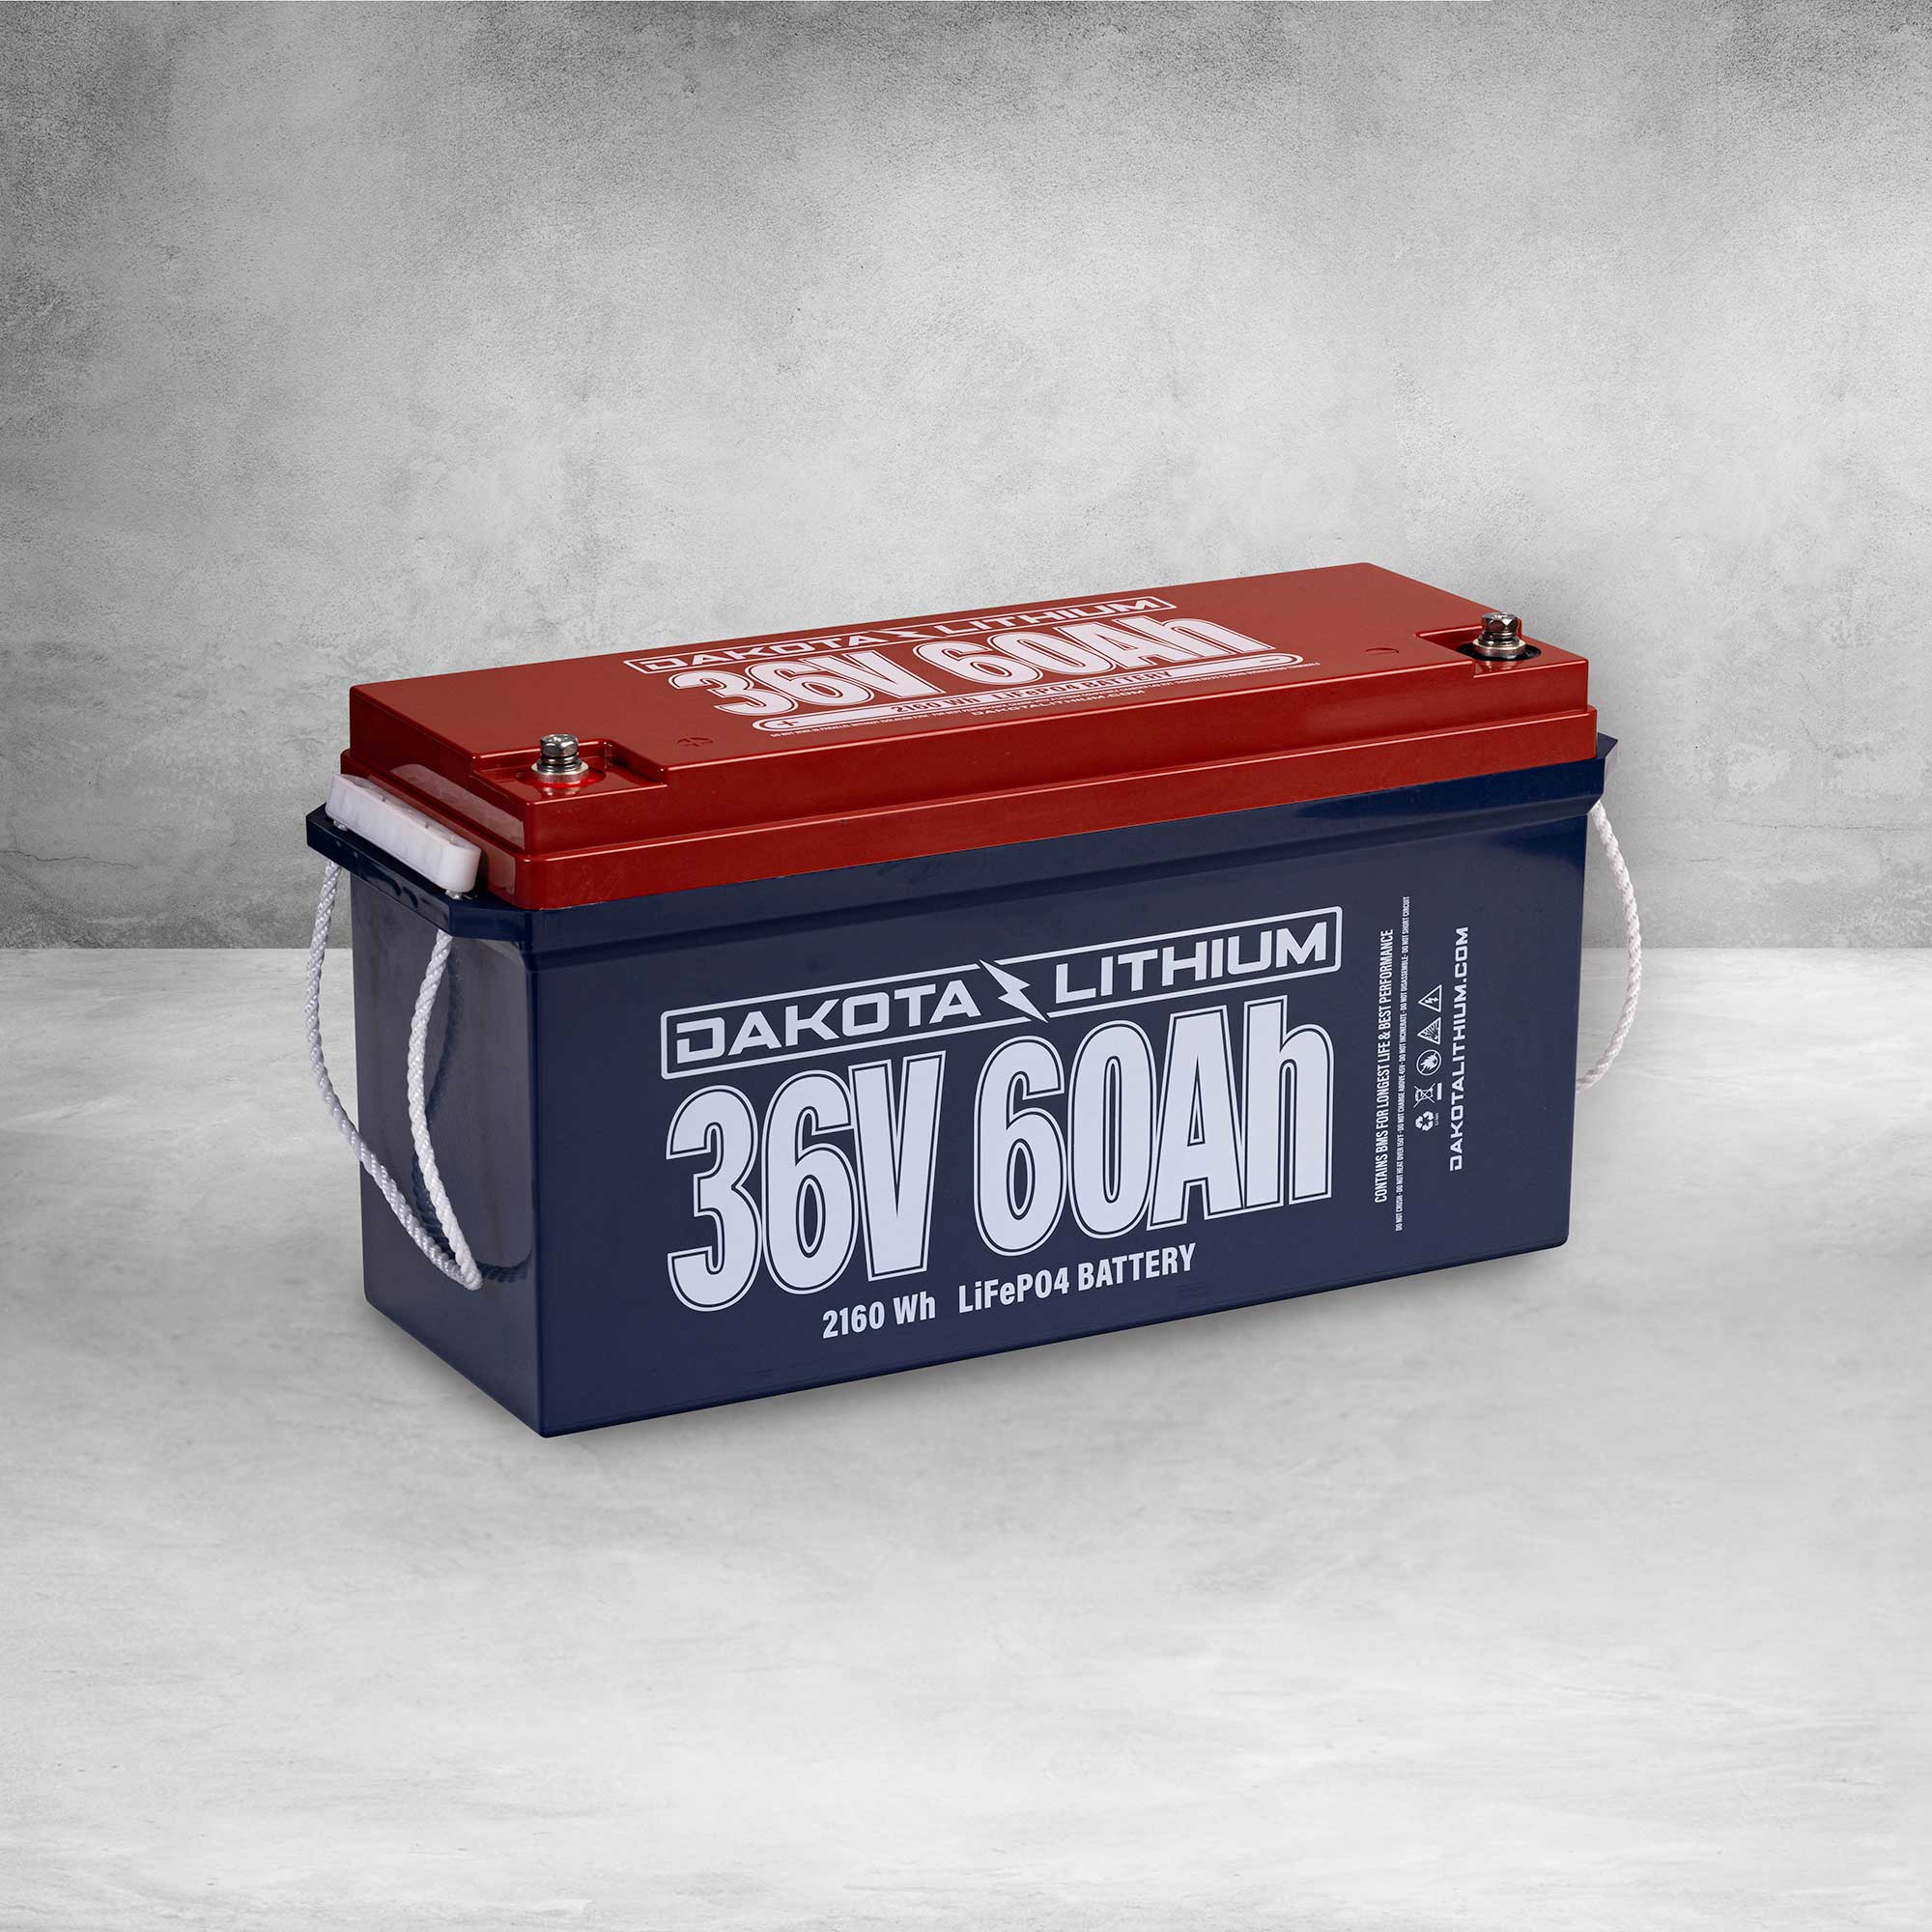 Dakota Lithium 36V 60AH Deep Cycle Single Battery